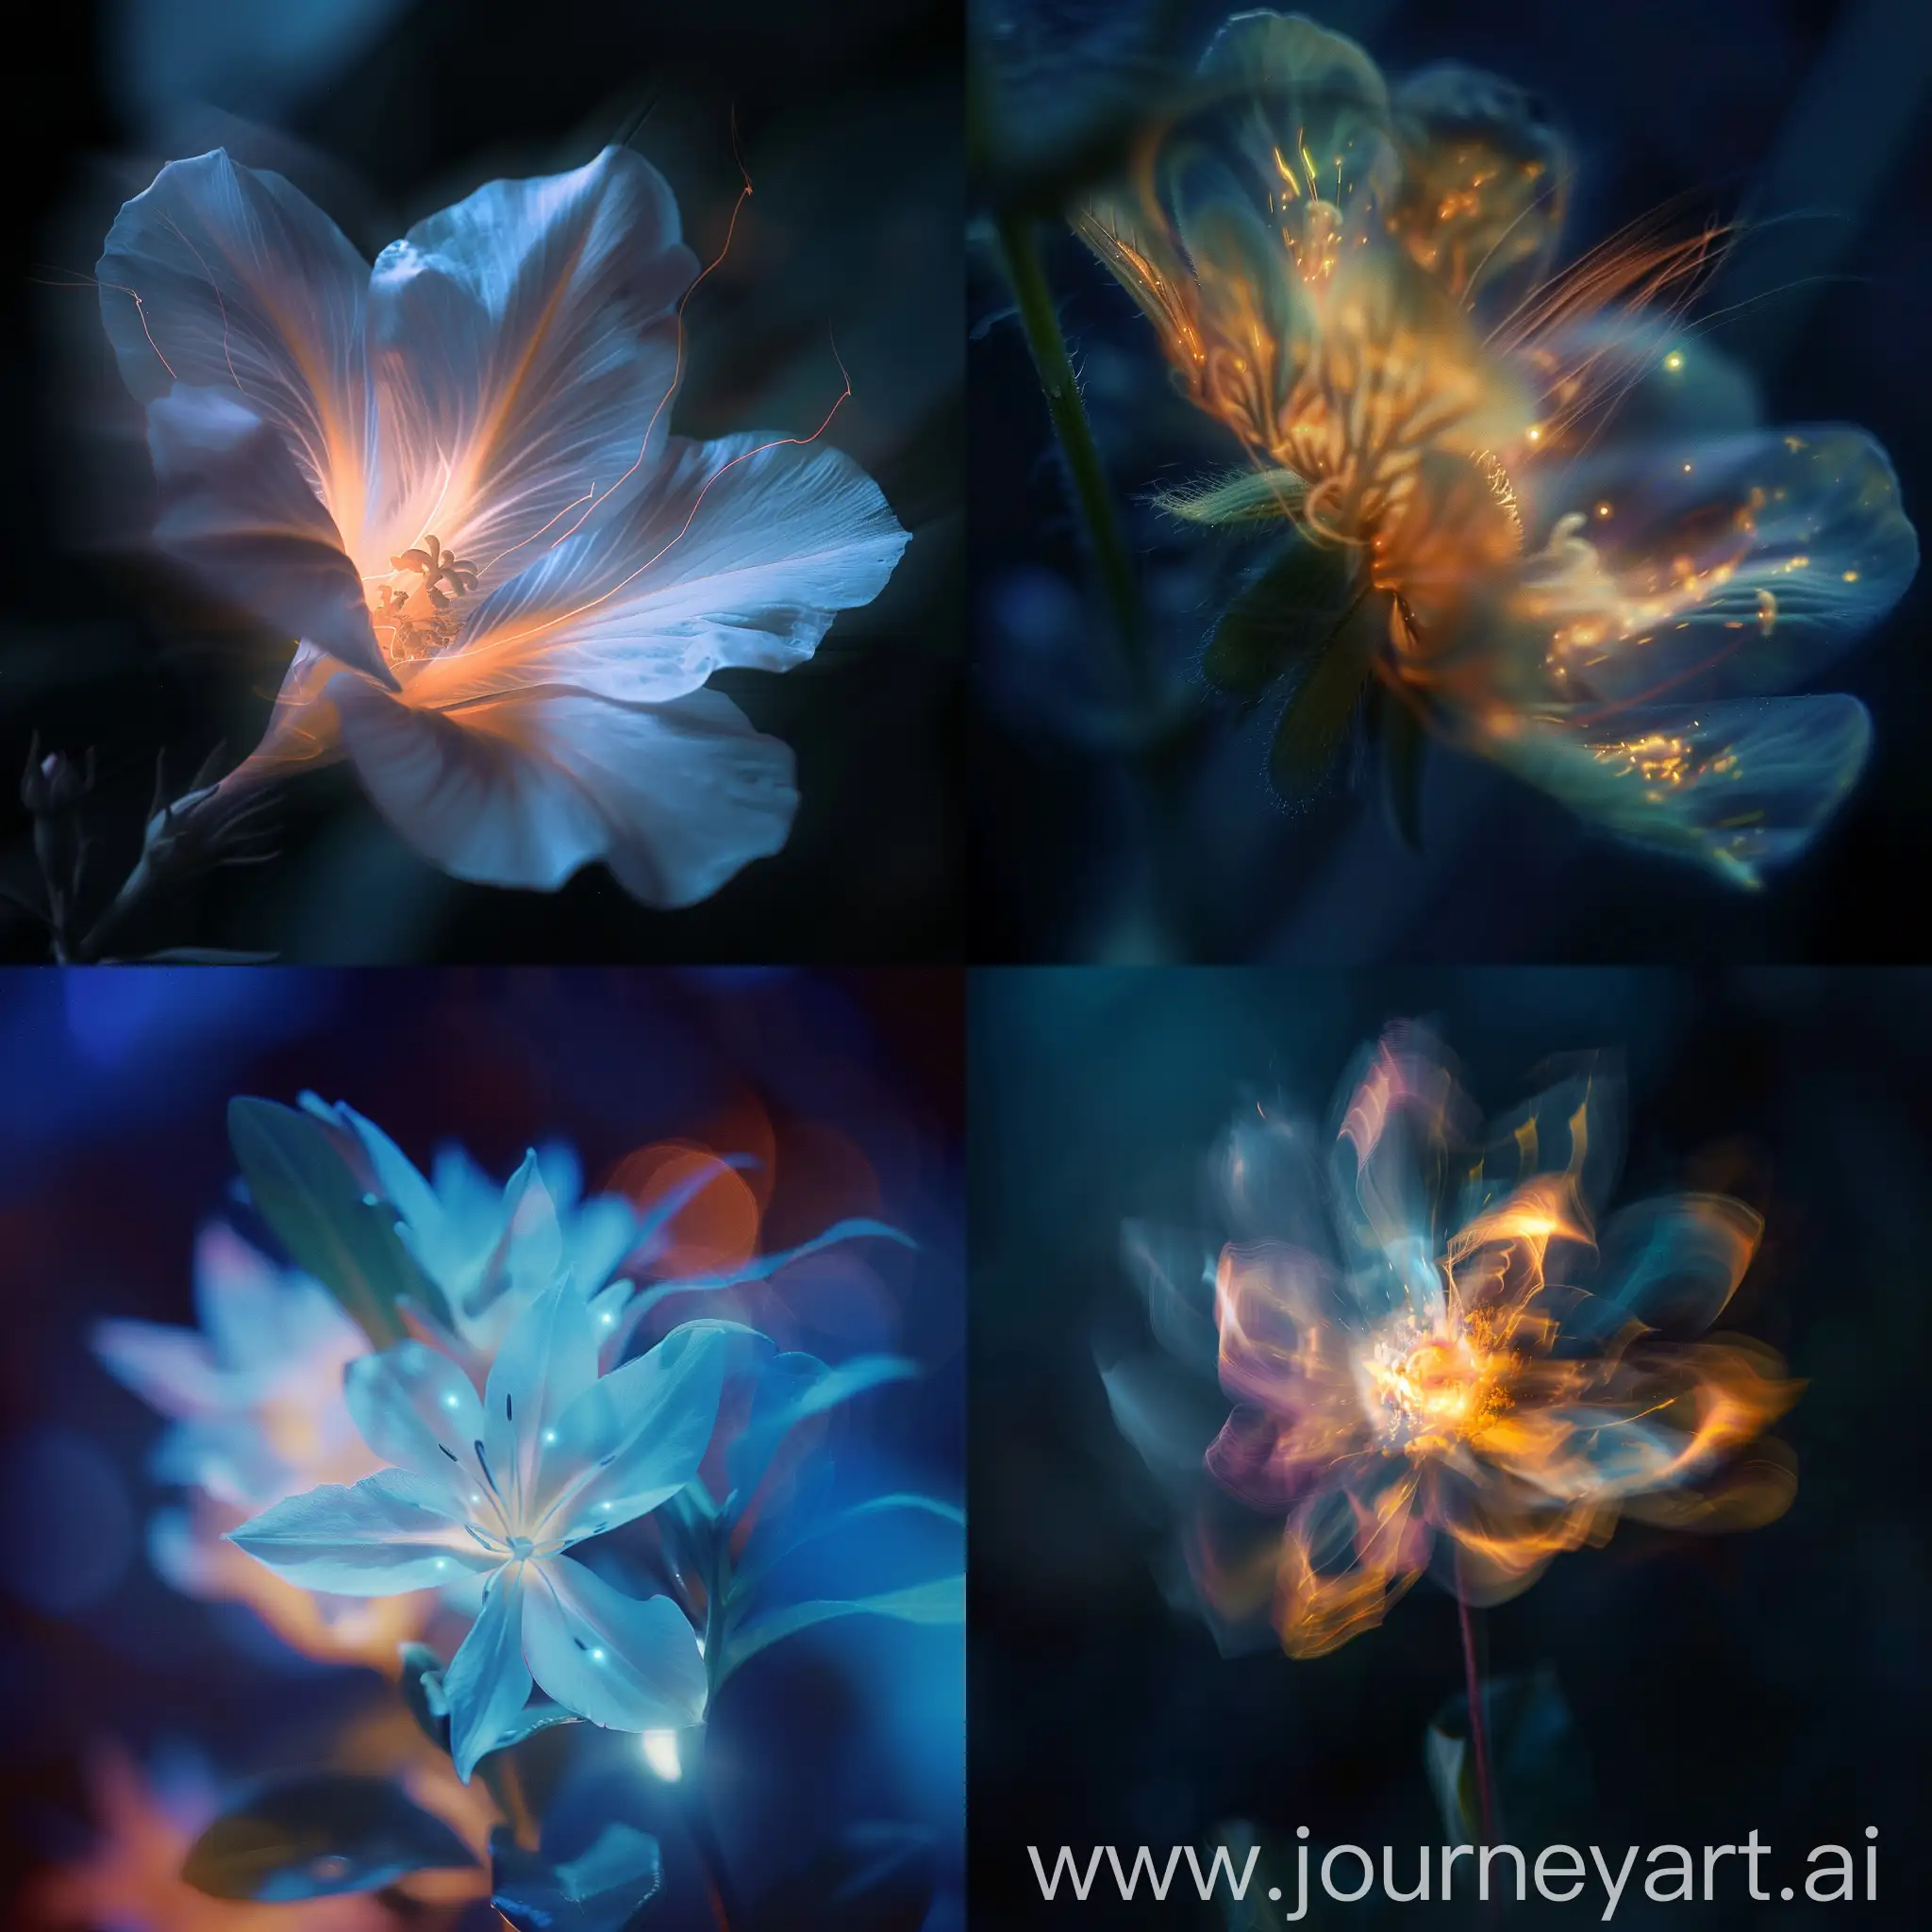 Enchanted-Night-Blossom-Illuminated-Flower-in-Blur